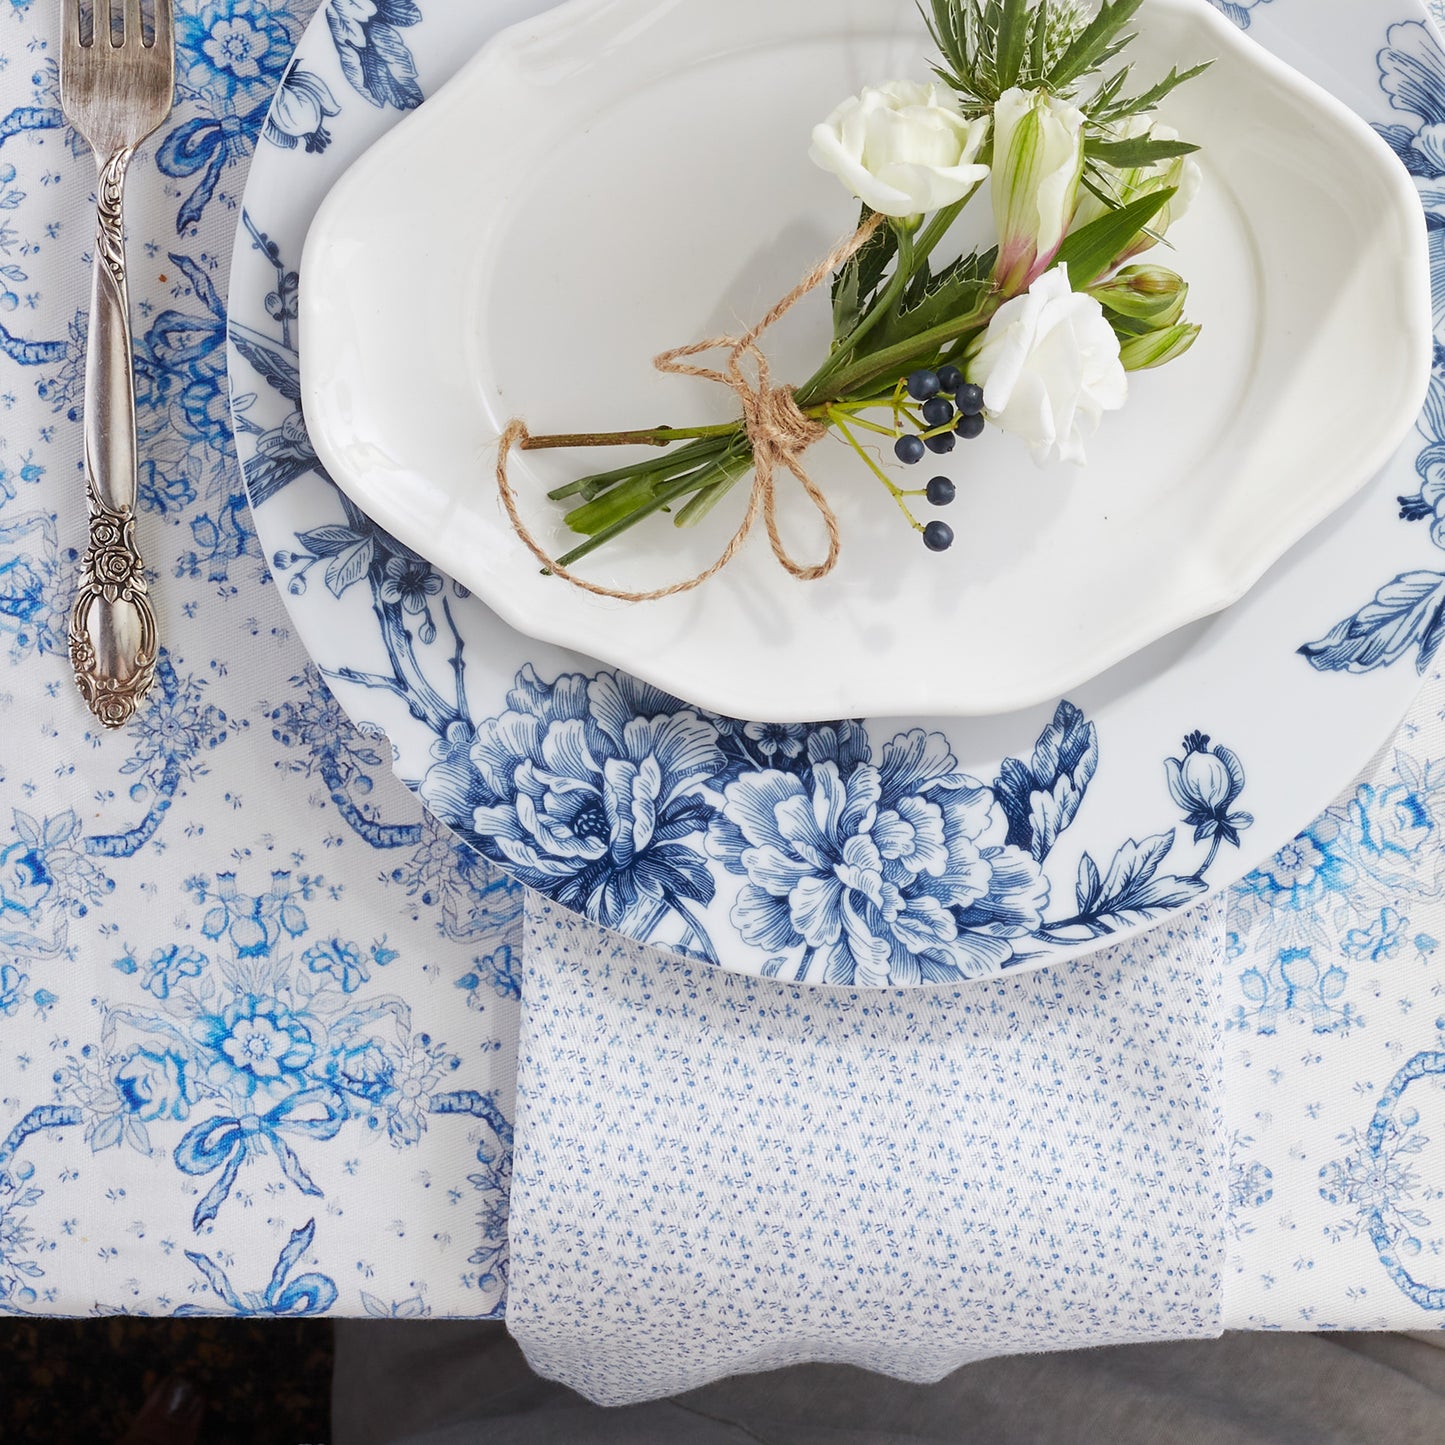 4-Piece Dinner Napkin Set Sarah Flint x Maman Blue And White Ditsy Floral Cotton